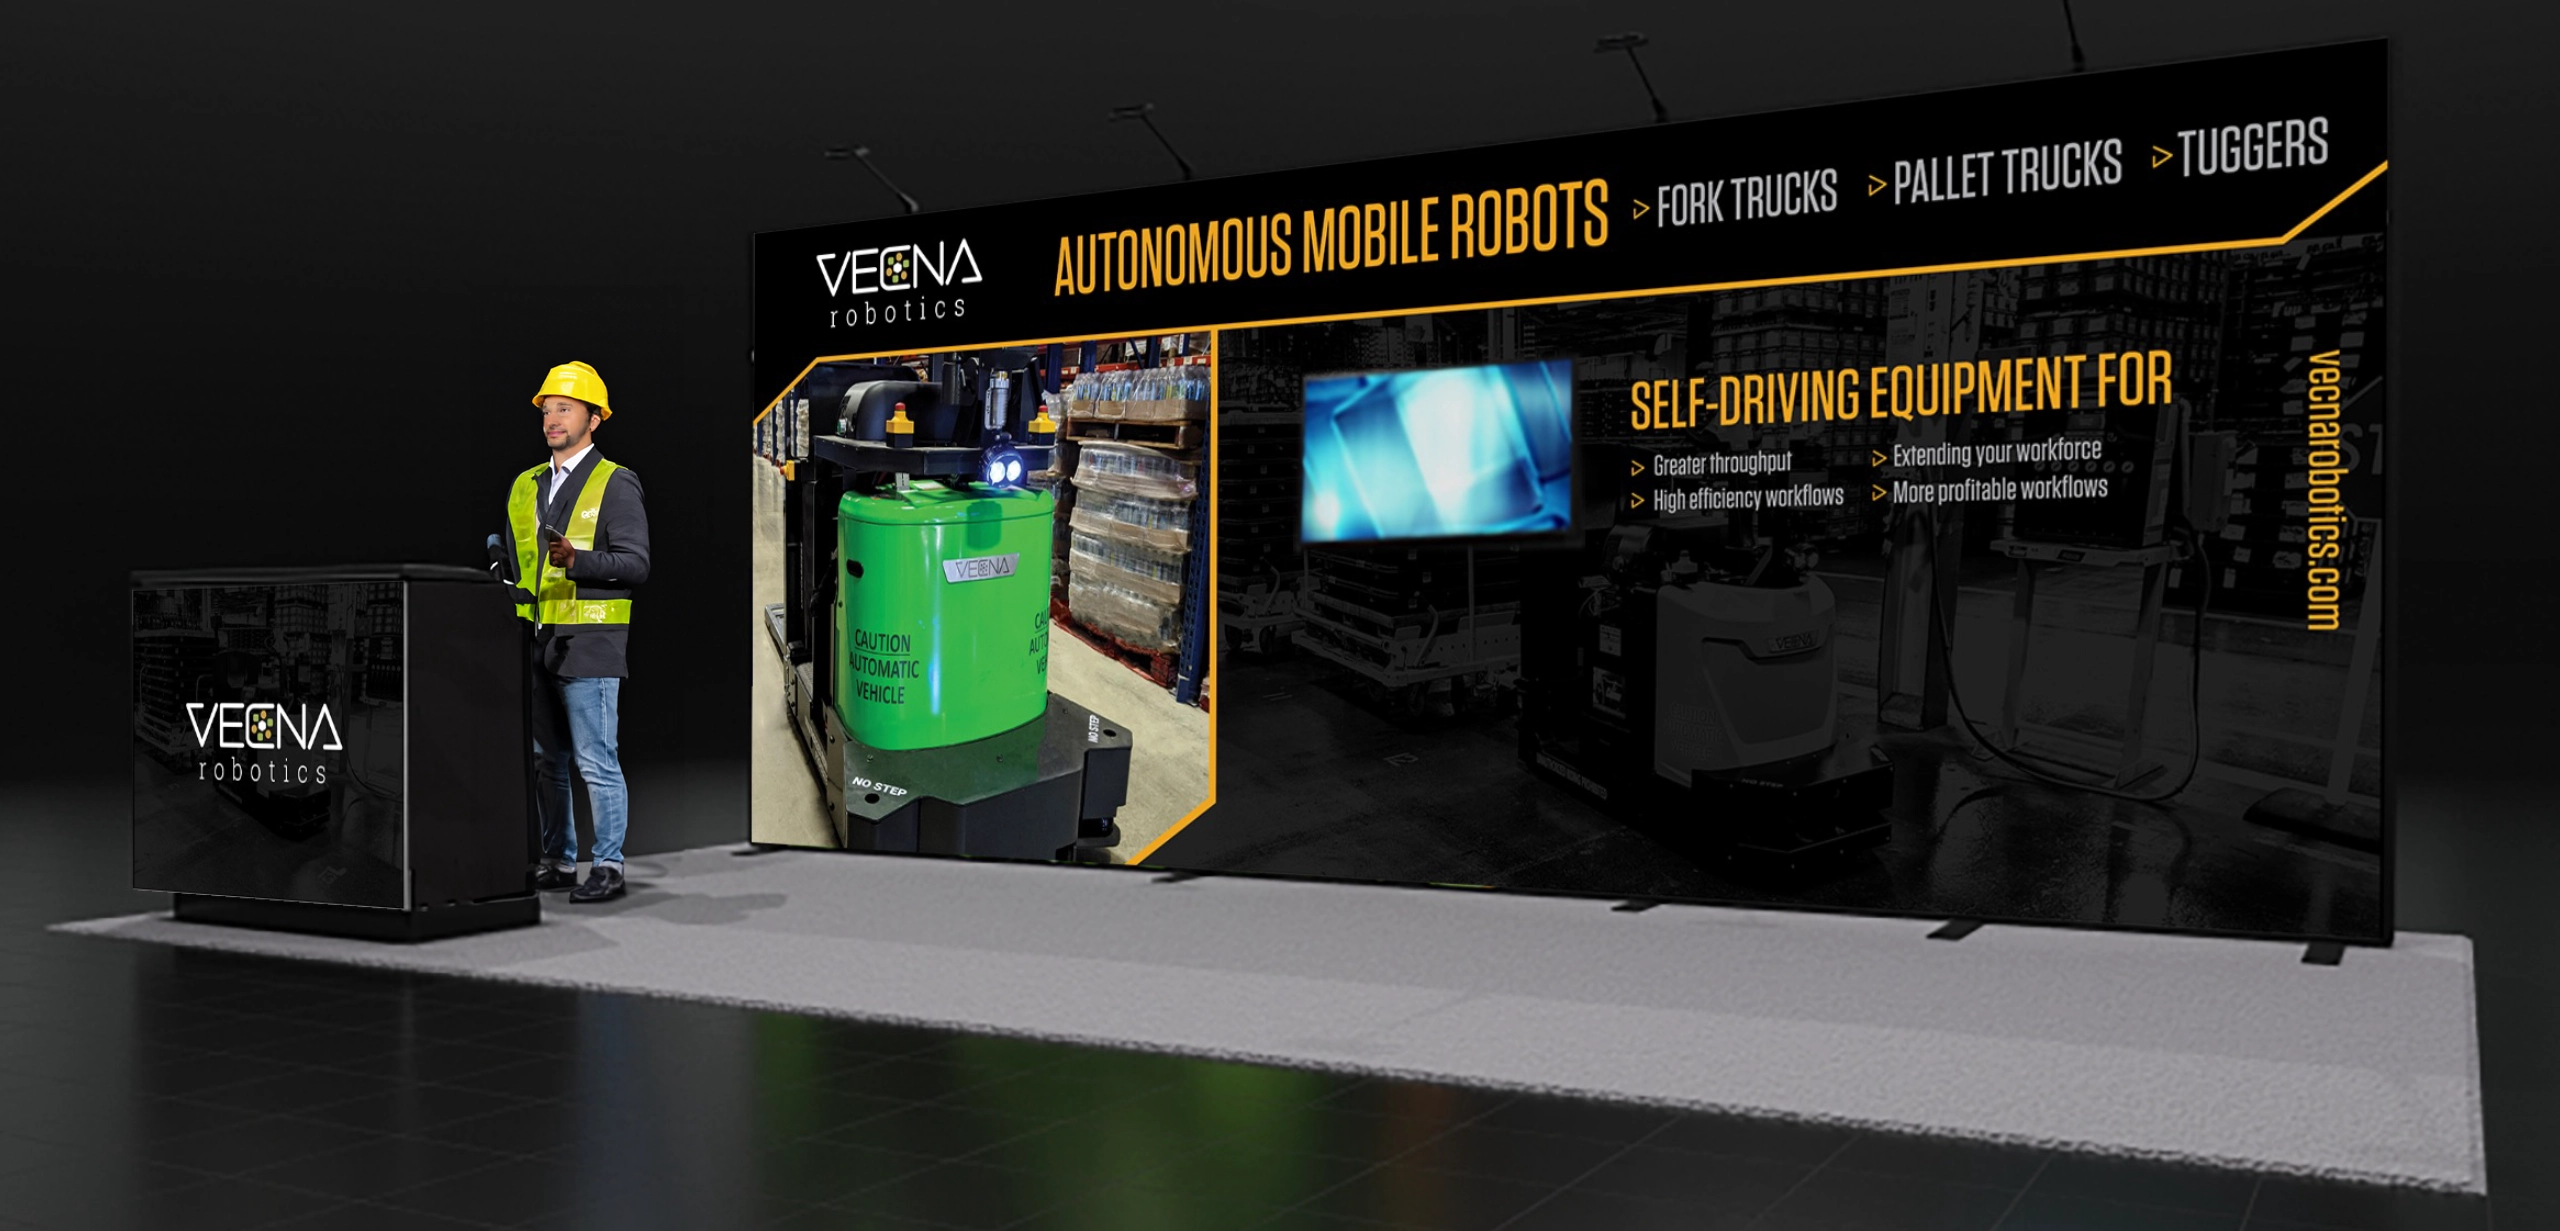 tradeshow design services for an autonomous mobile robotics company